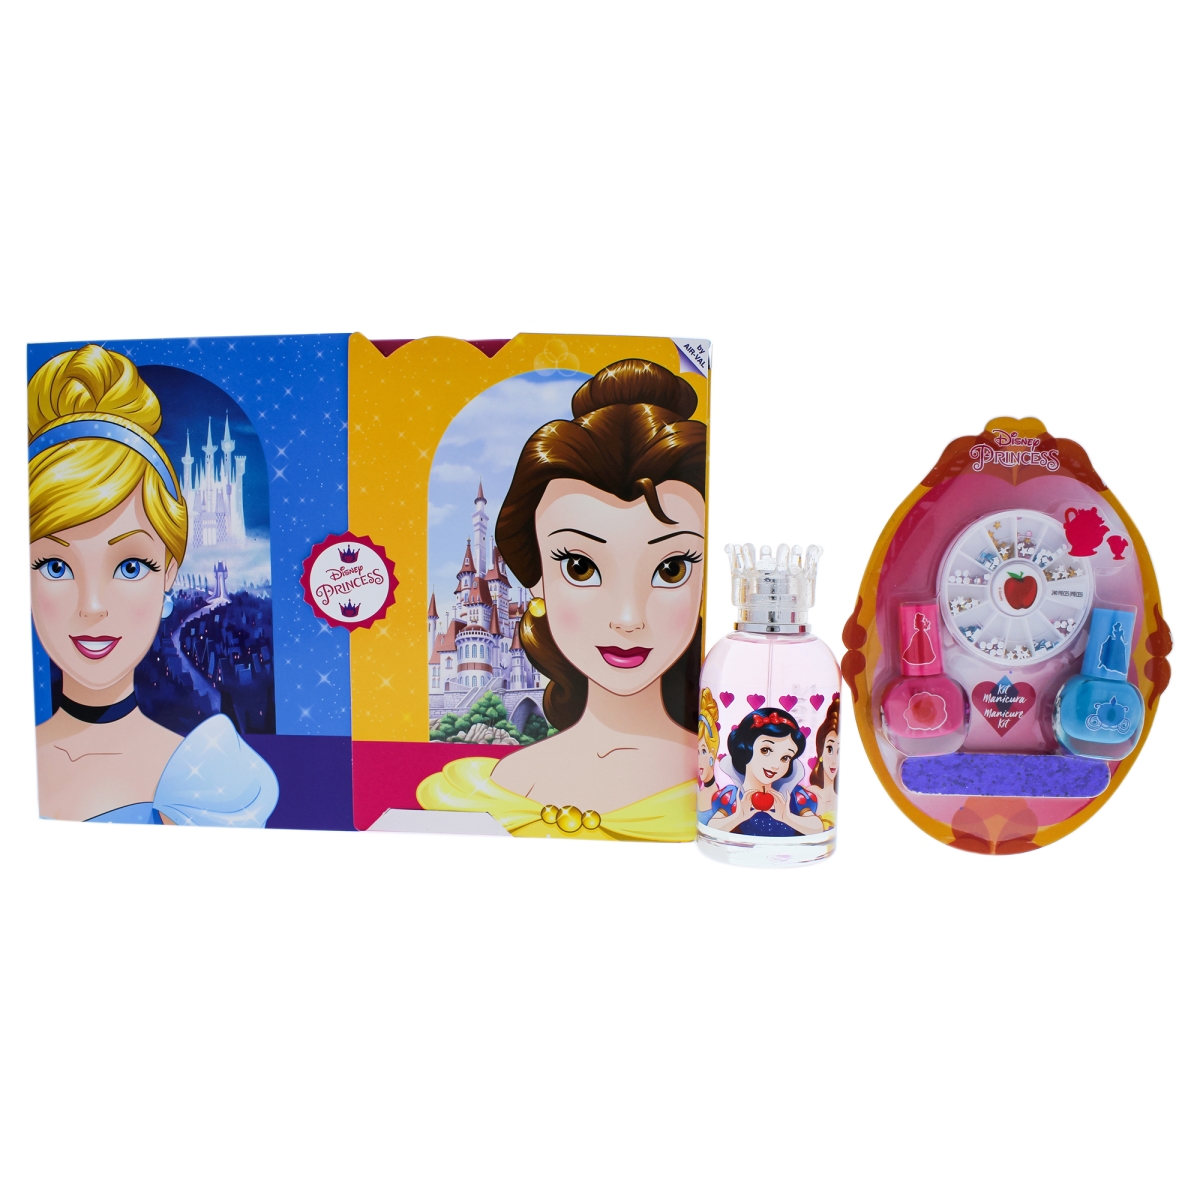 I0089330 2 Piece Princess Gift Set For Kids